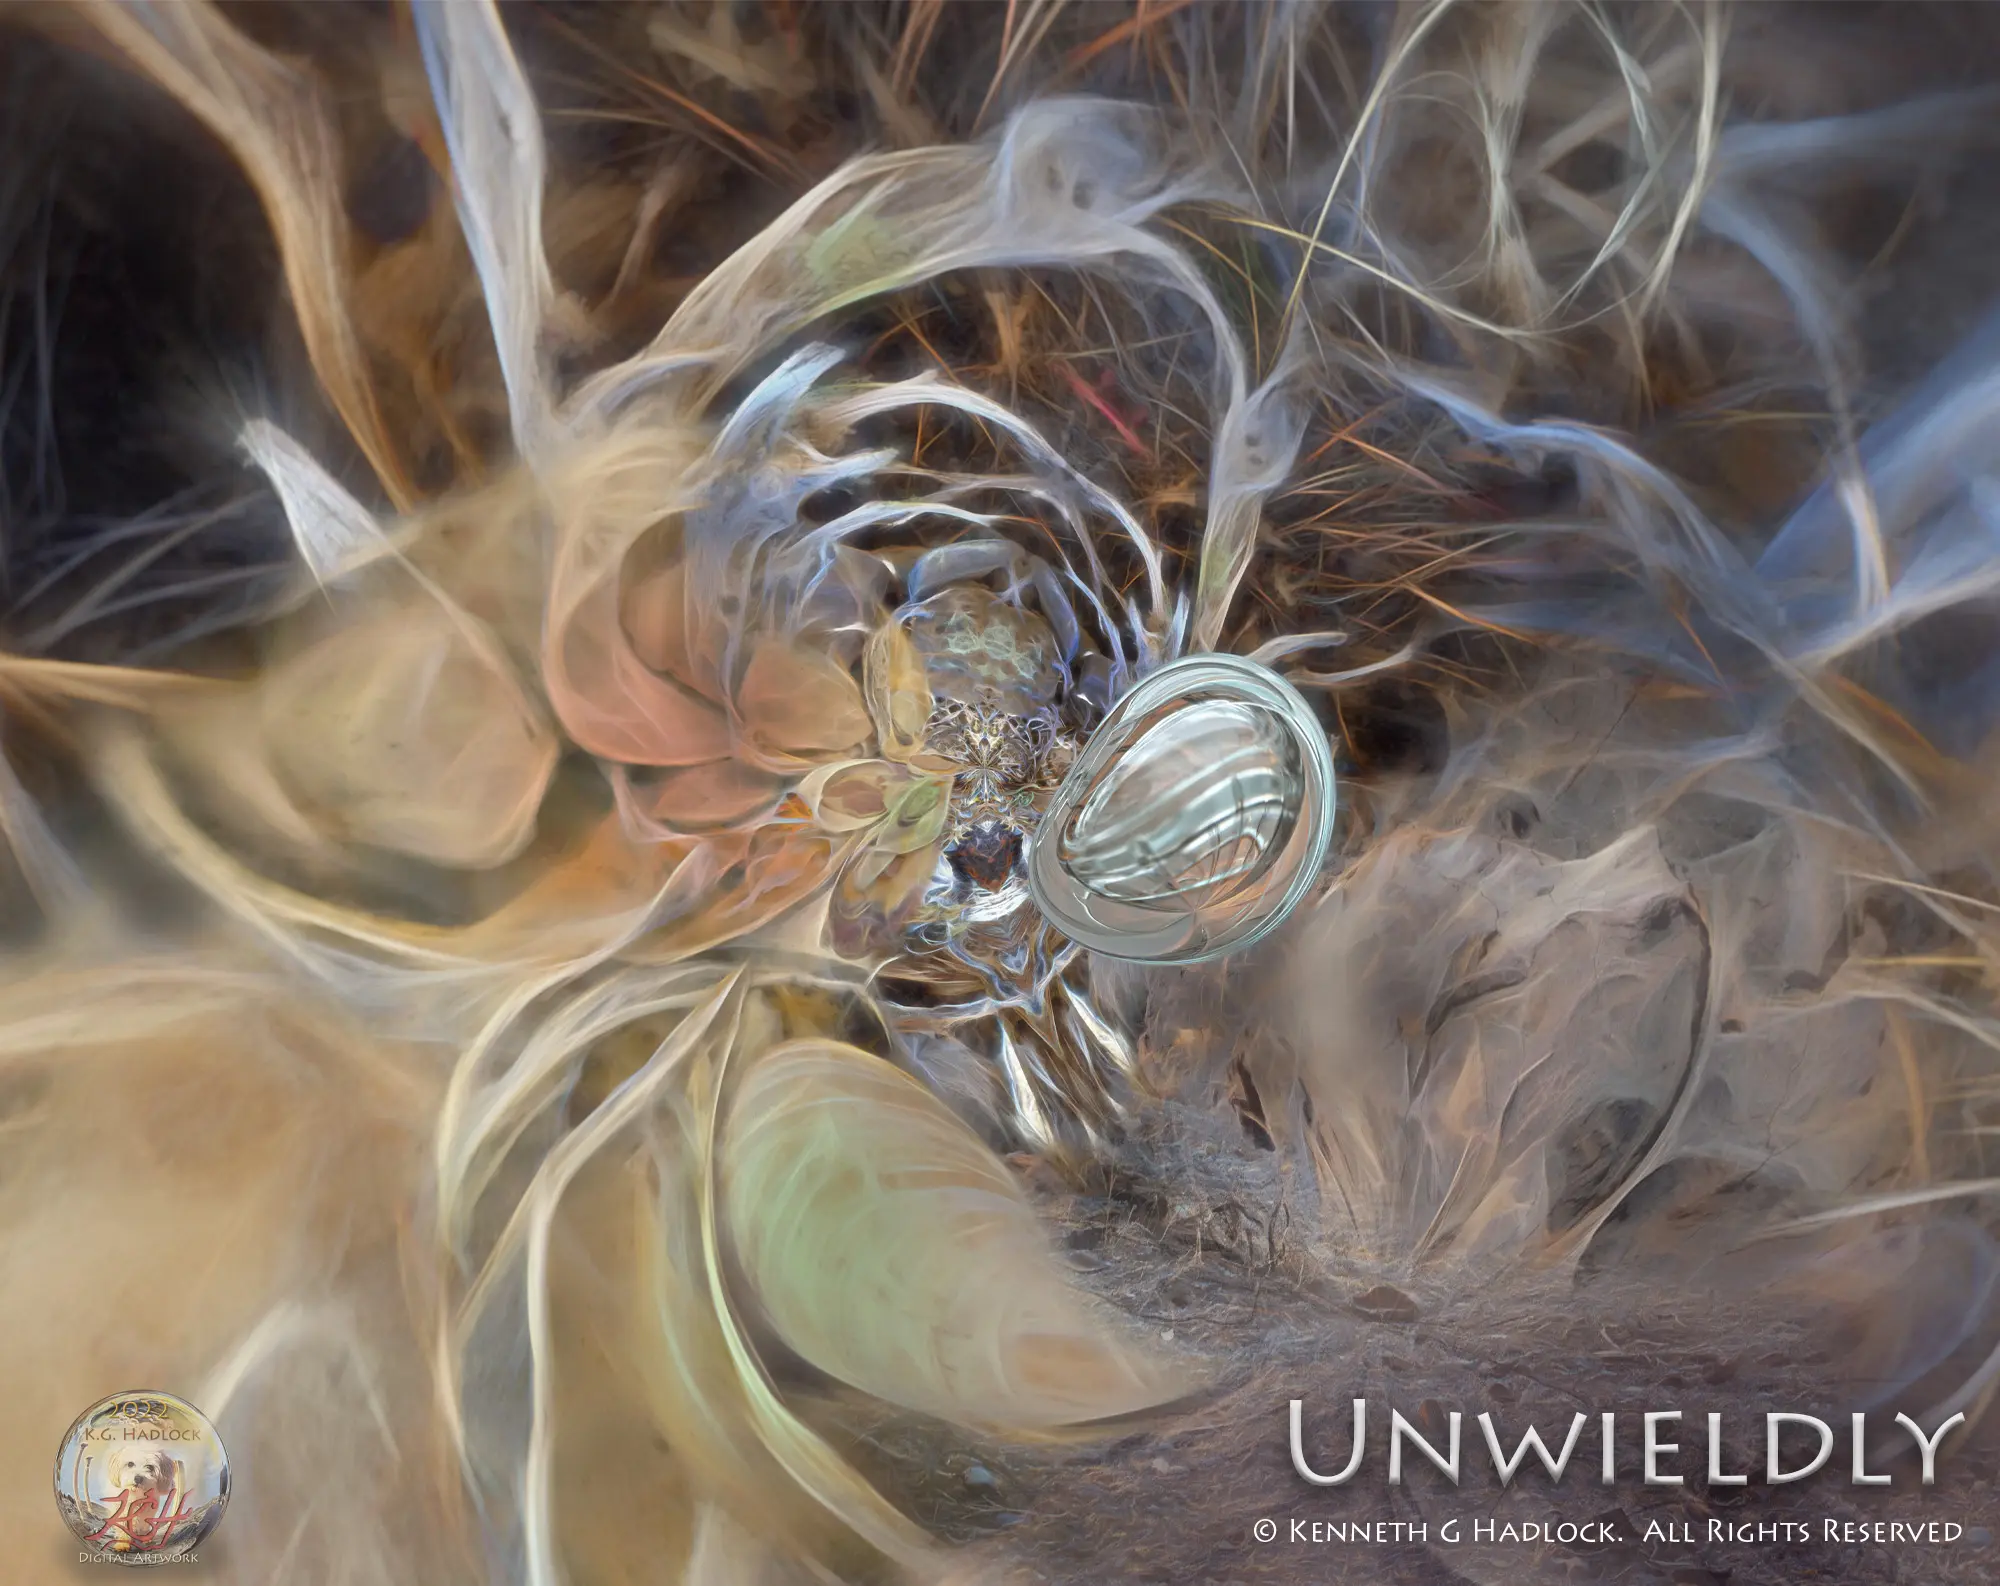 Digital Art - "Unwieldy"